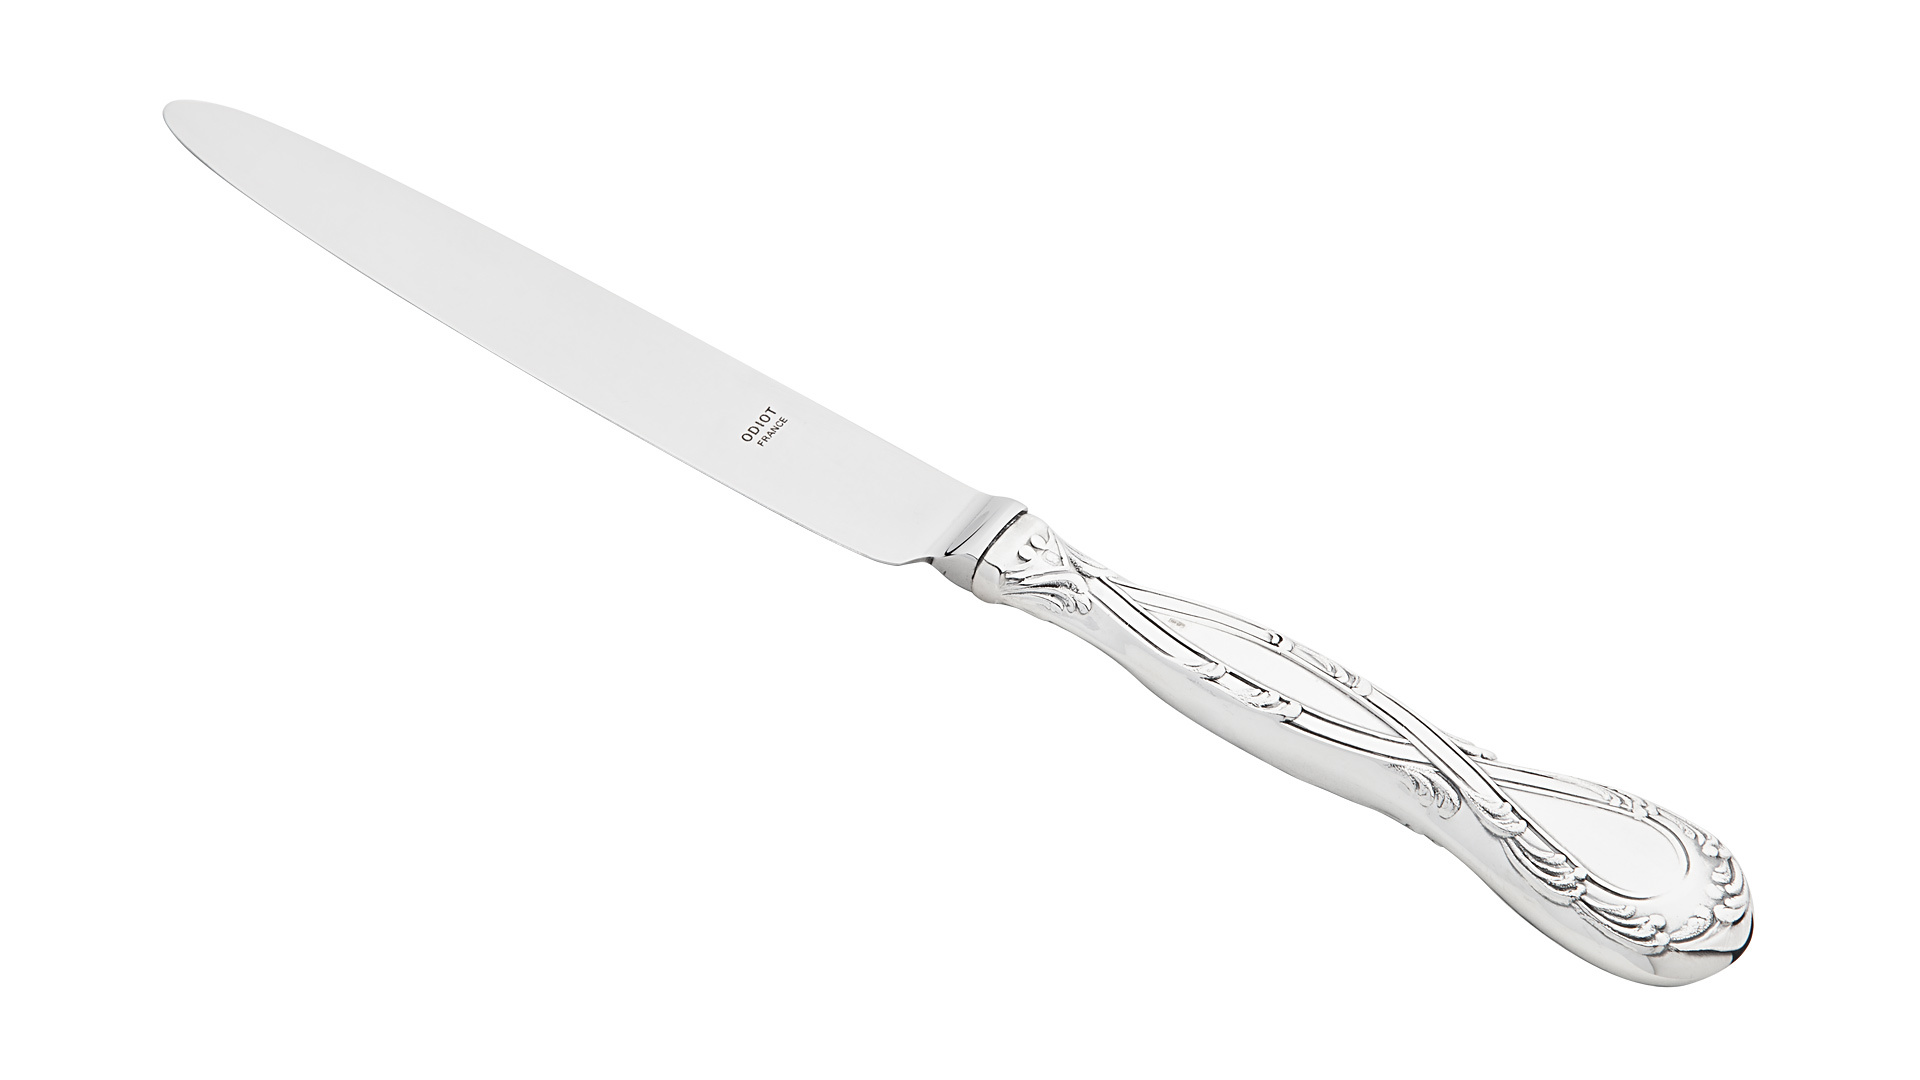 Нож столовый Odiot Трианон 24 см, серебро 925